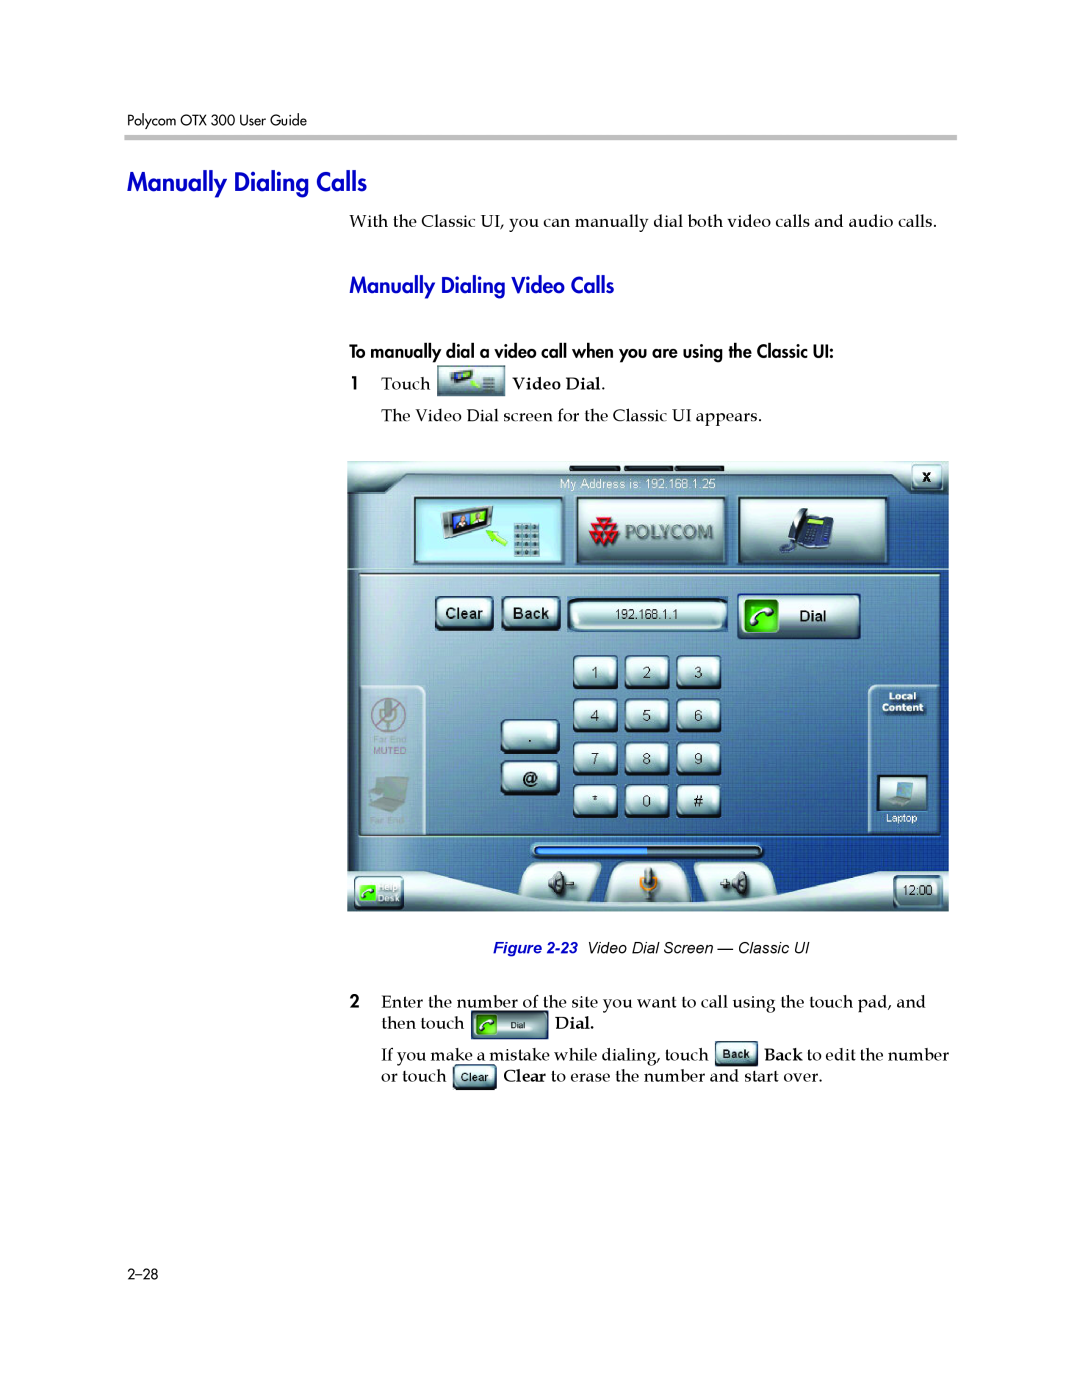 Polycom 300 manual Manually Dialing Calls, Manually Dialing Video Calls, 1Touch Video Dial 